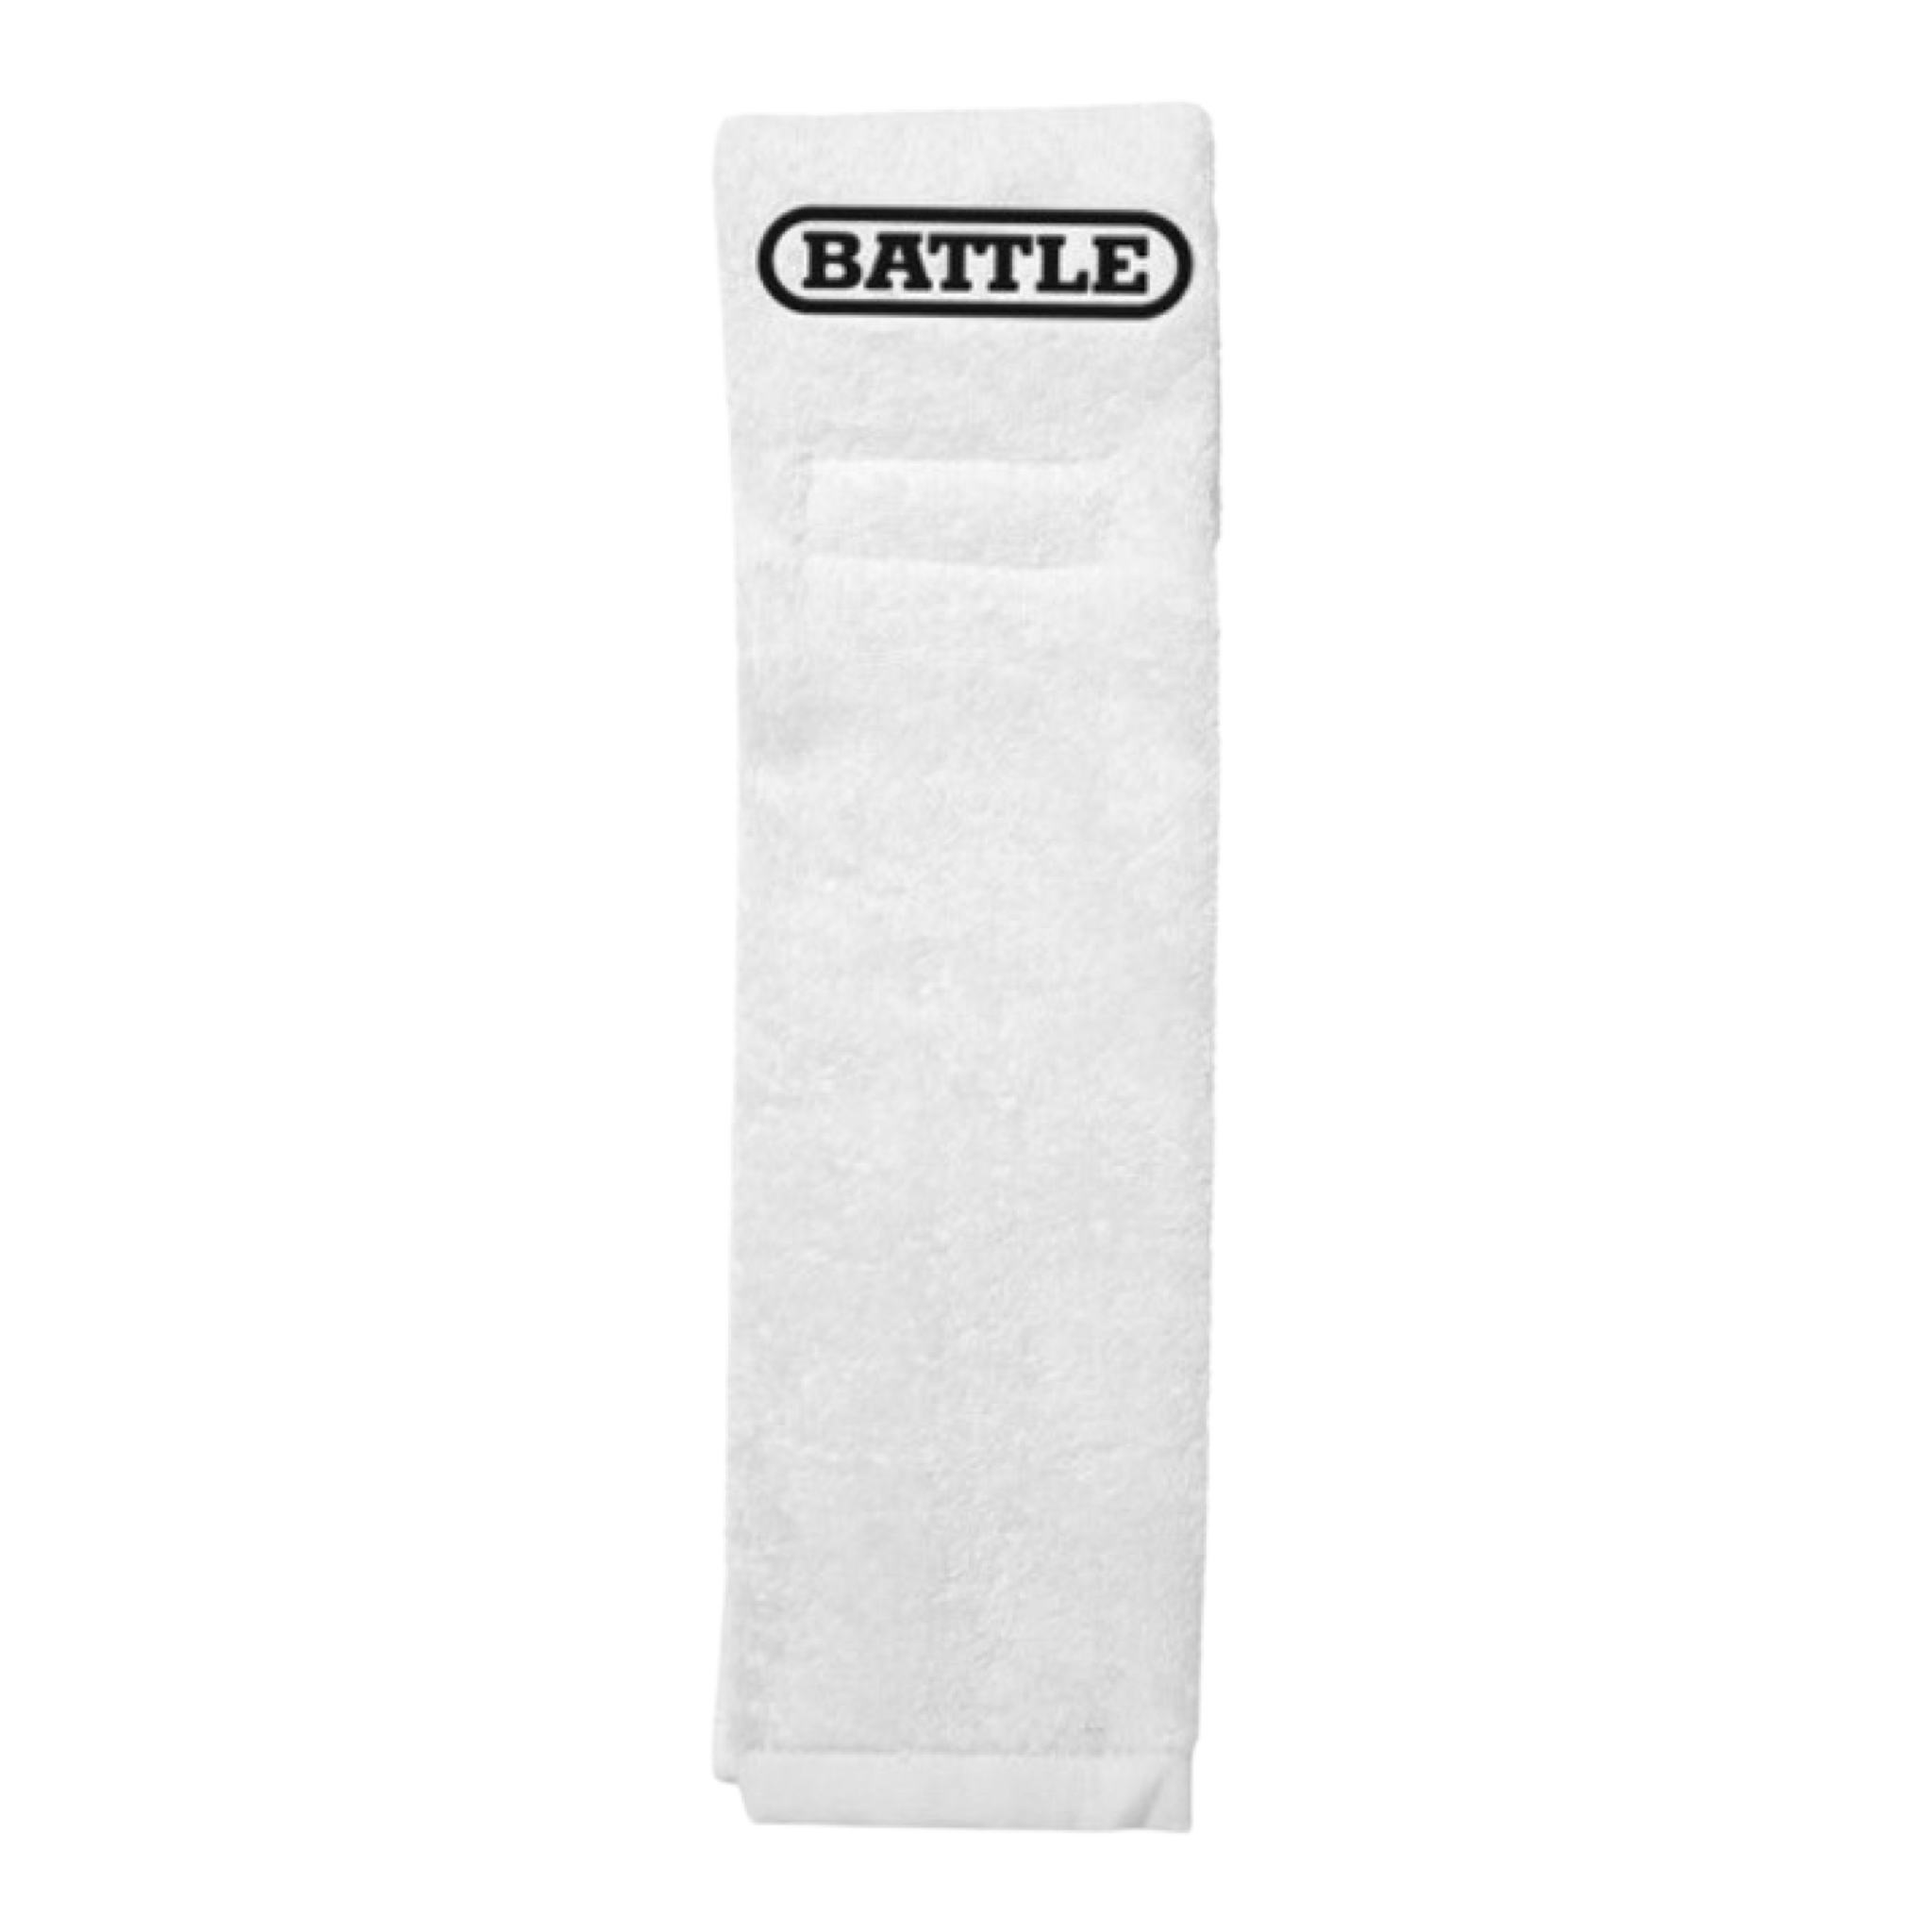 Battle Towel / Serviette